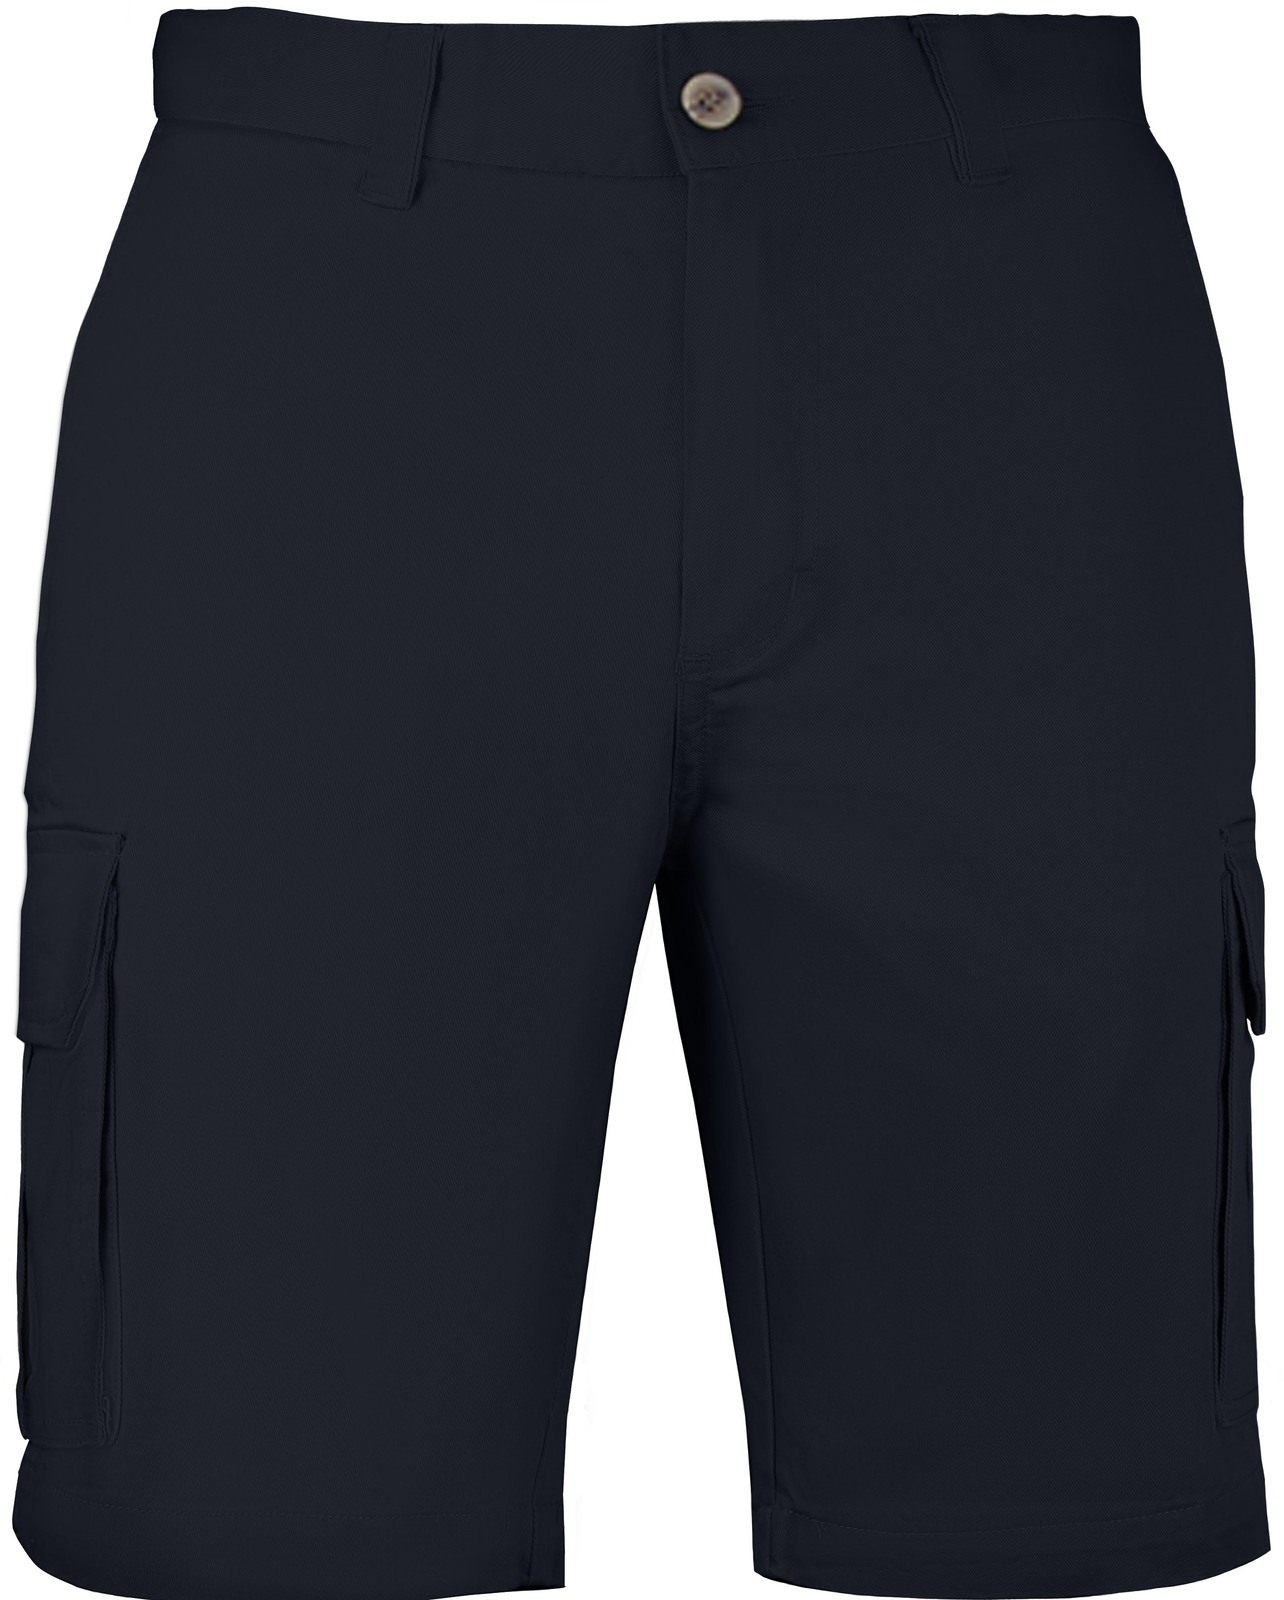 Outdoor Cotton Short Pants Half Pants Cargo Shorts Work Wear Casual Men Loo  ） | eBay